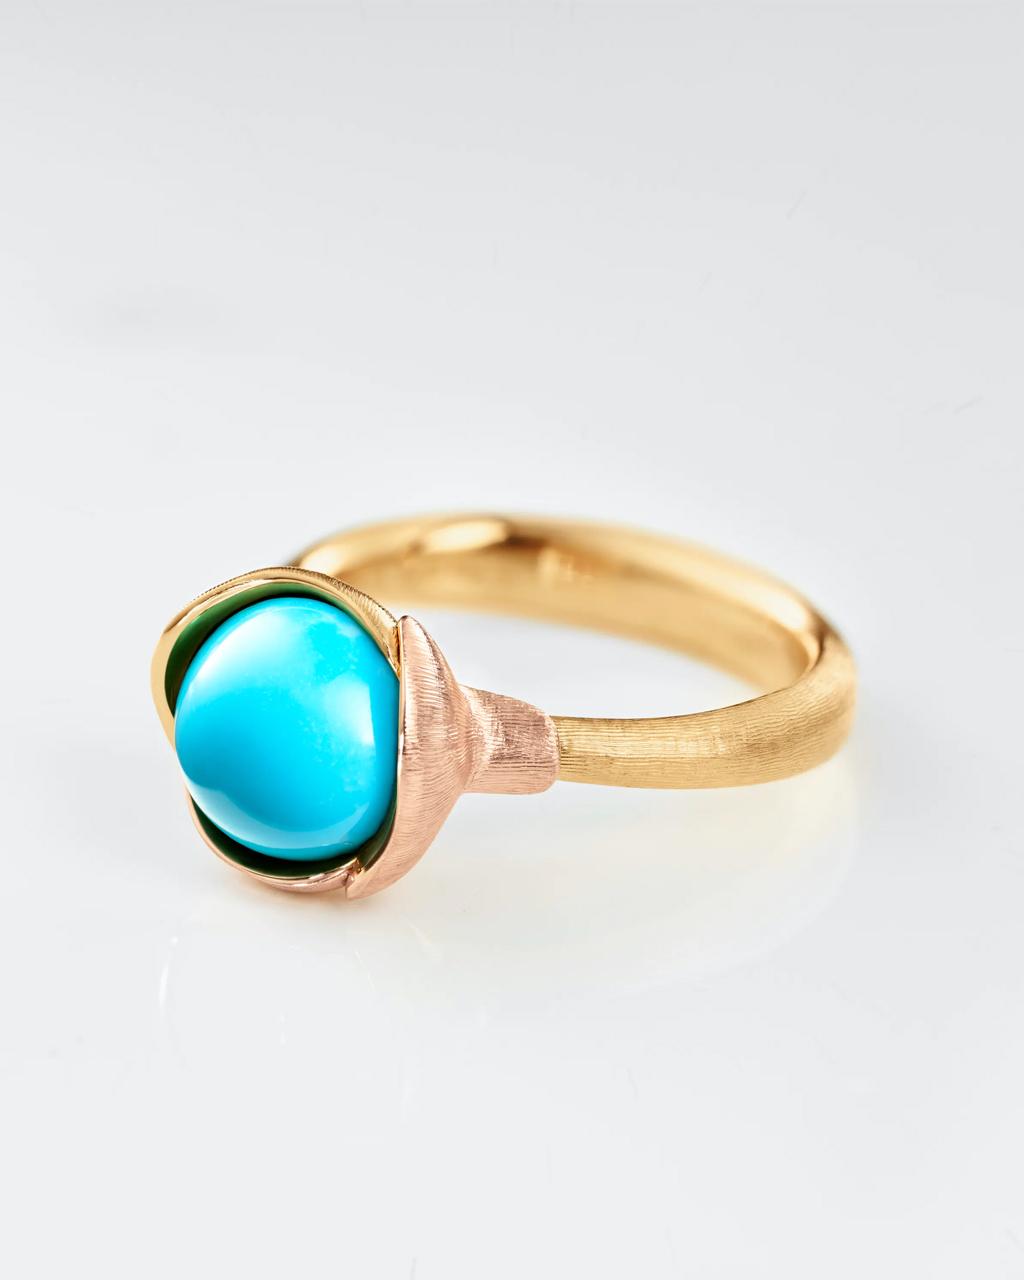 Ole Lynggaard 'Lotus' Turquoise Ring - Size 1